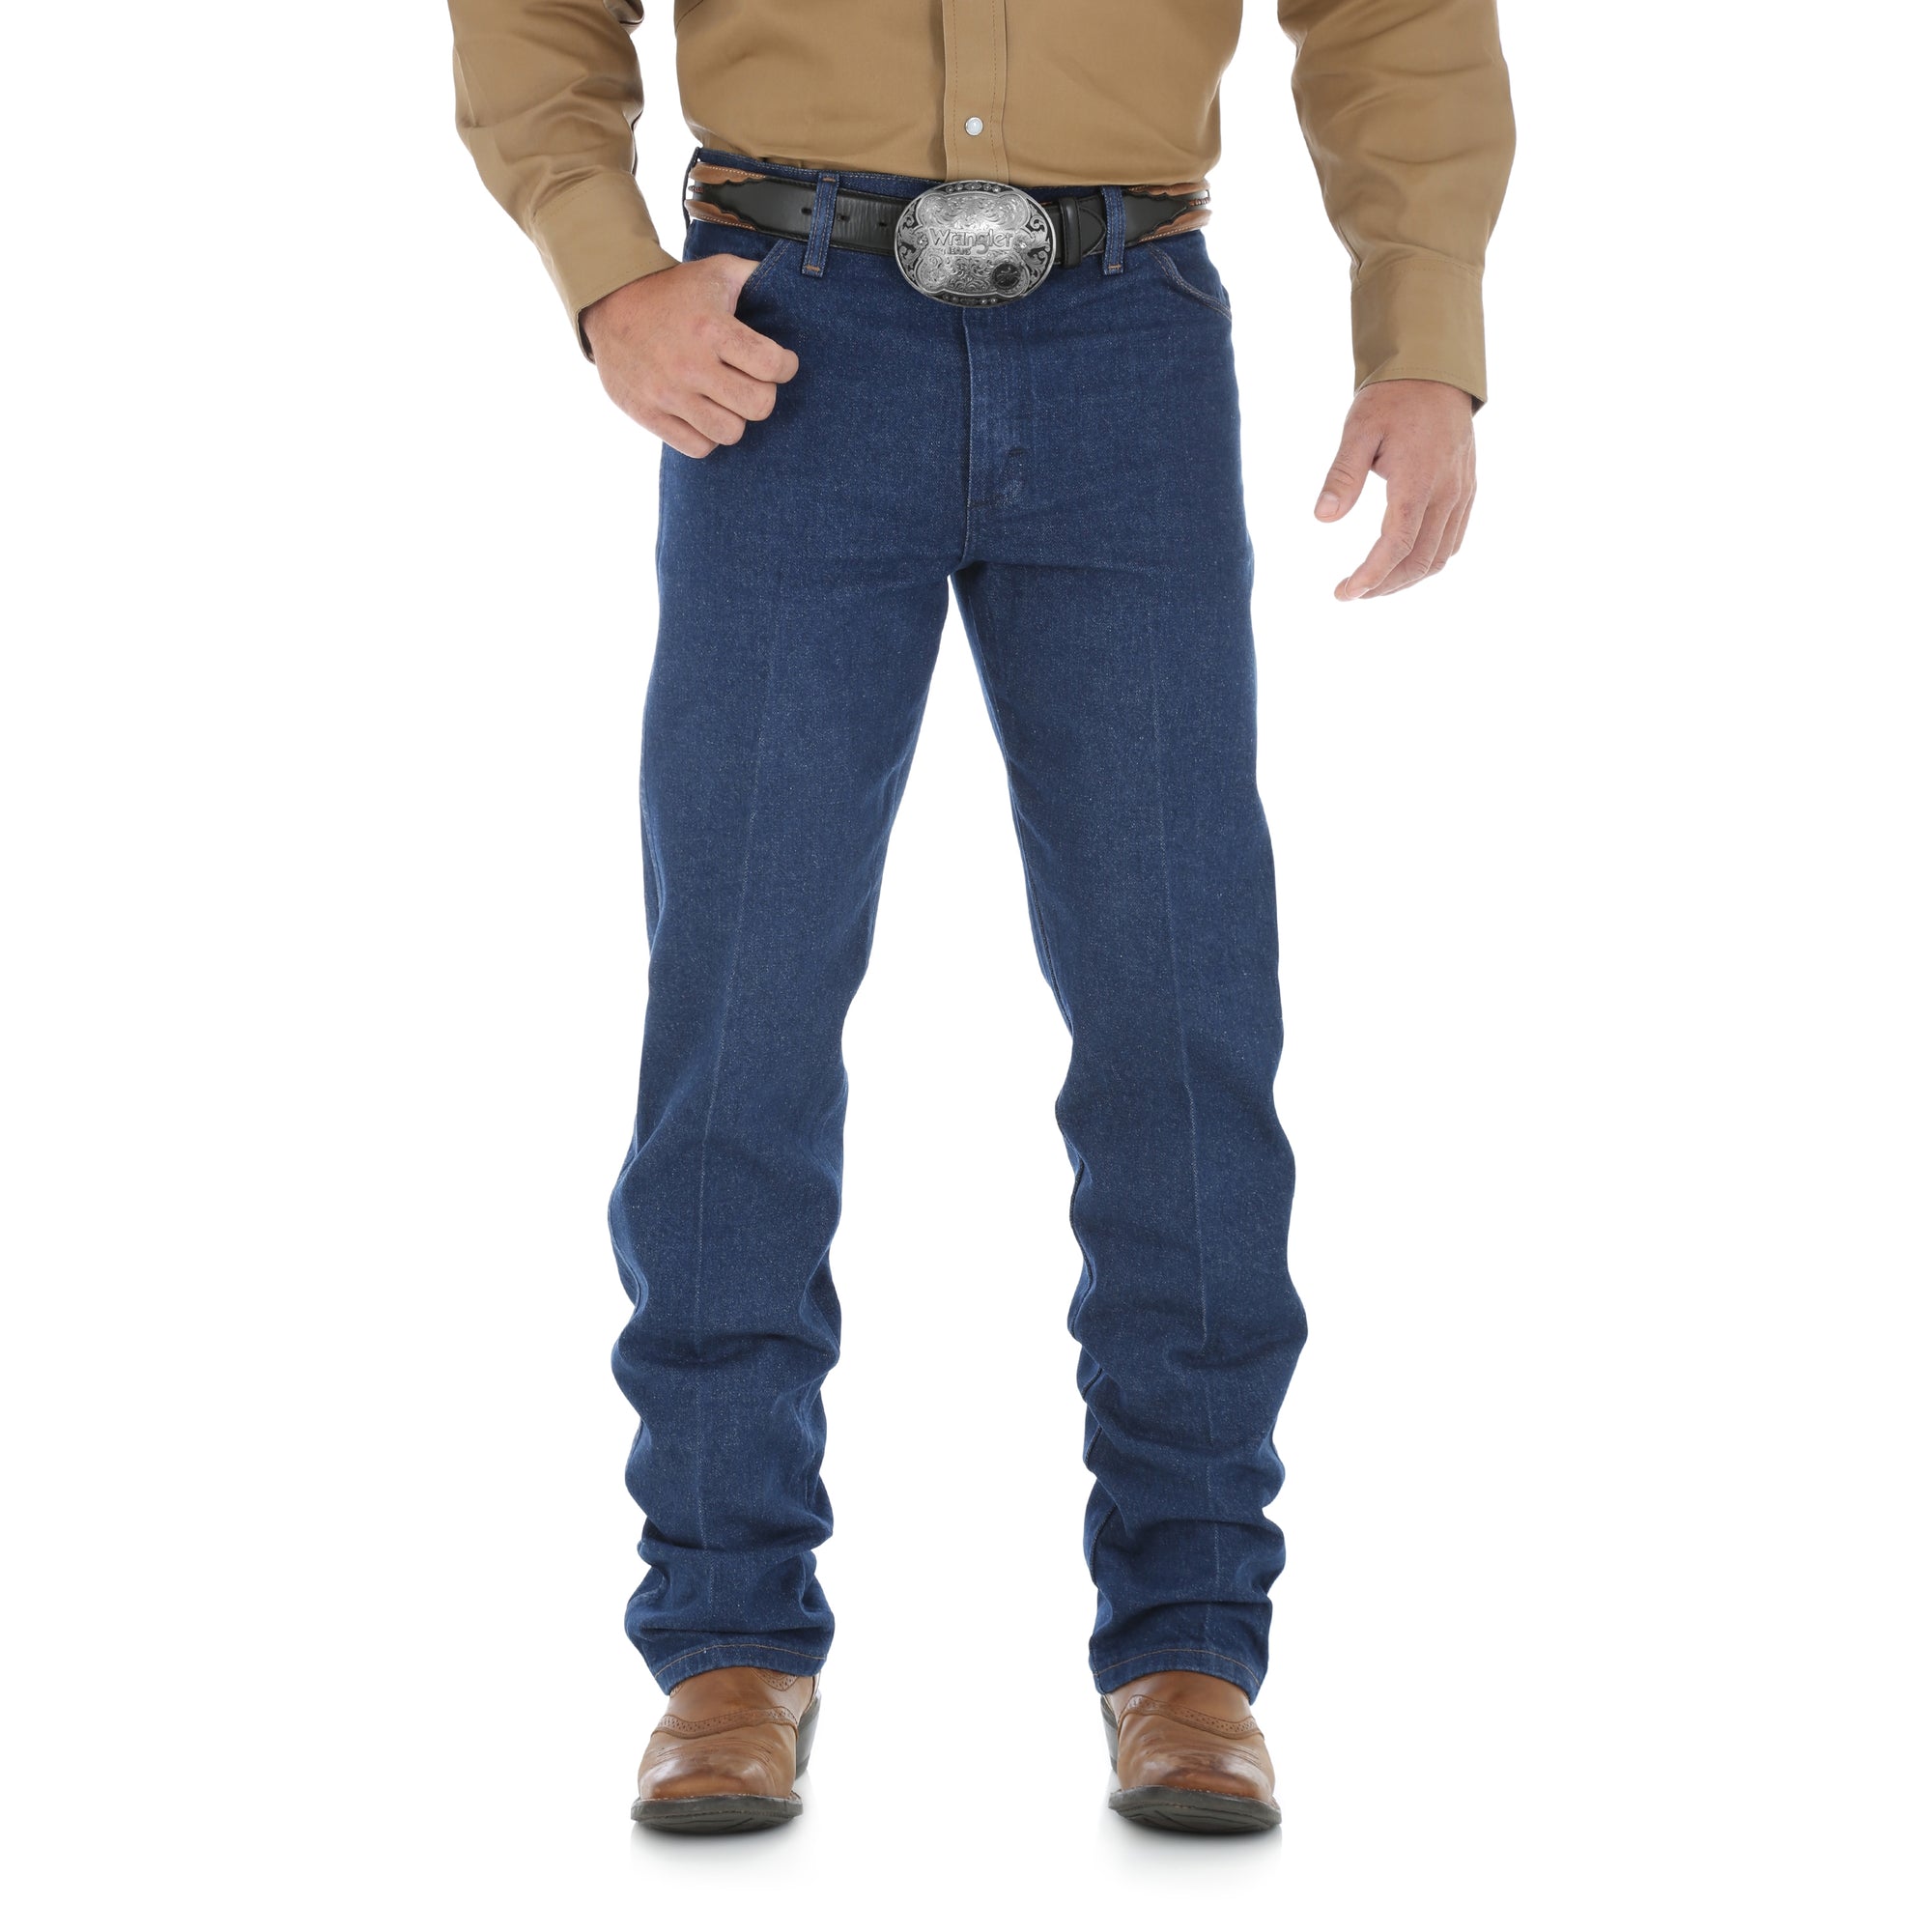 Wrangler Men's Original Fit Cowboy Cut Prewashed Jeans